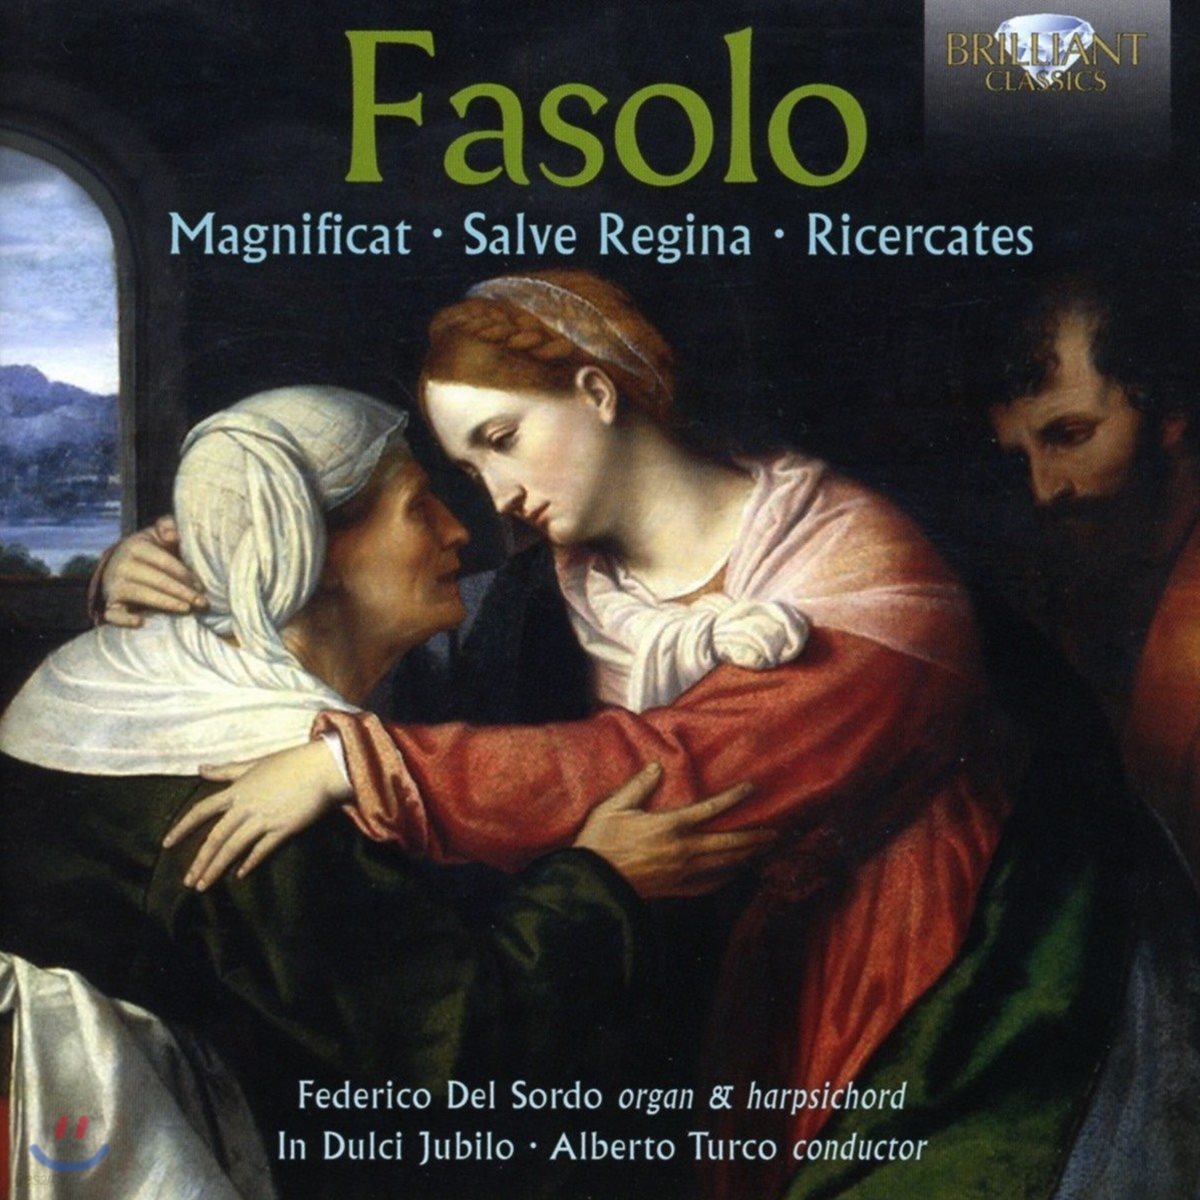 Federico Del Sordo 파솔로: 매그니피캇, 살베 레지나, 리체르카테 (Giovanni Battista Fasolo: Magnificat, Salve Regina, Ricercates)